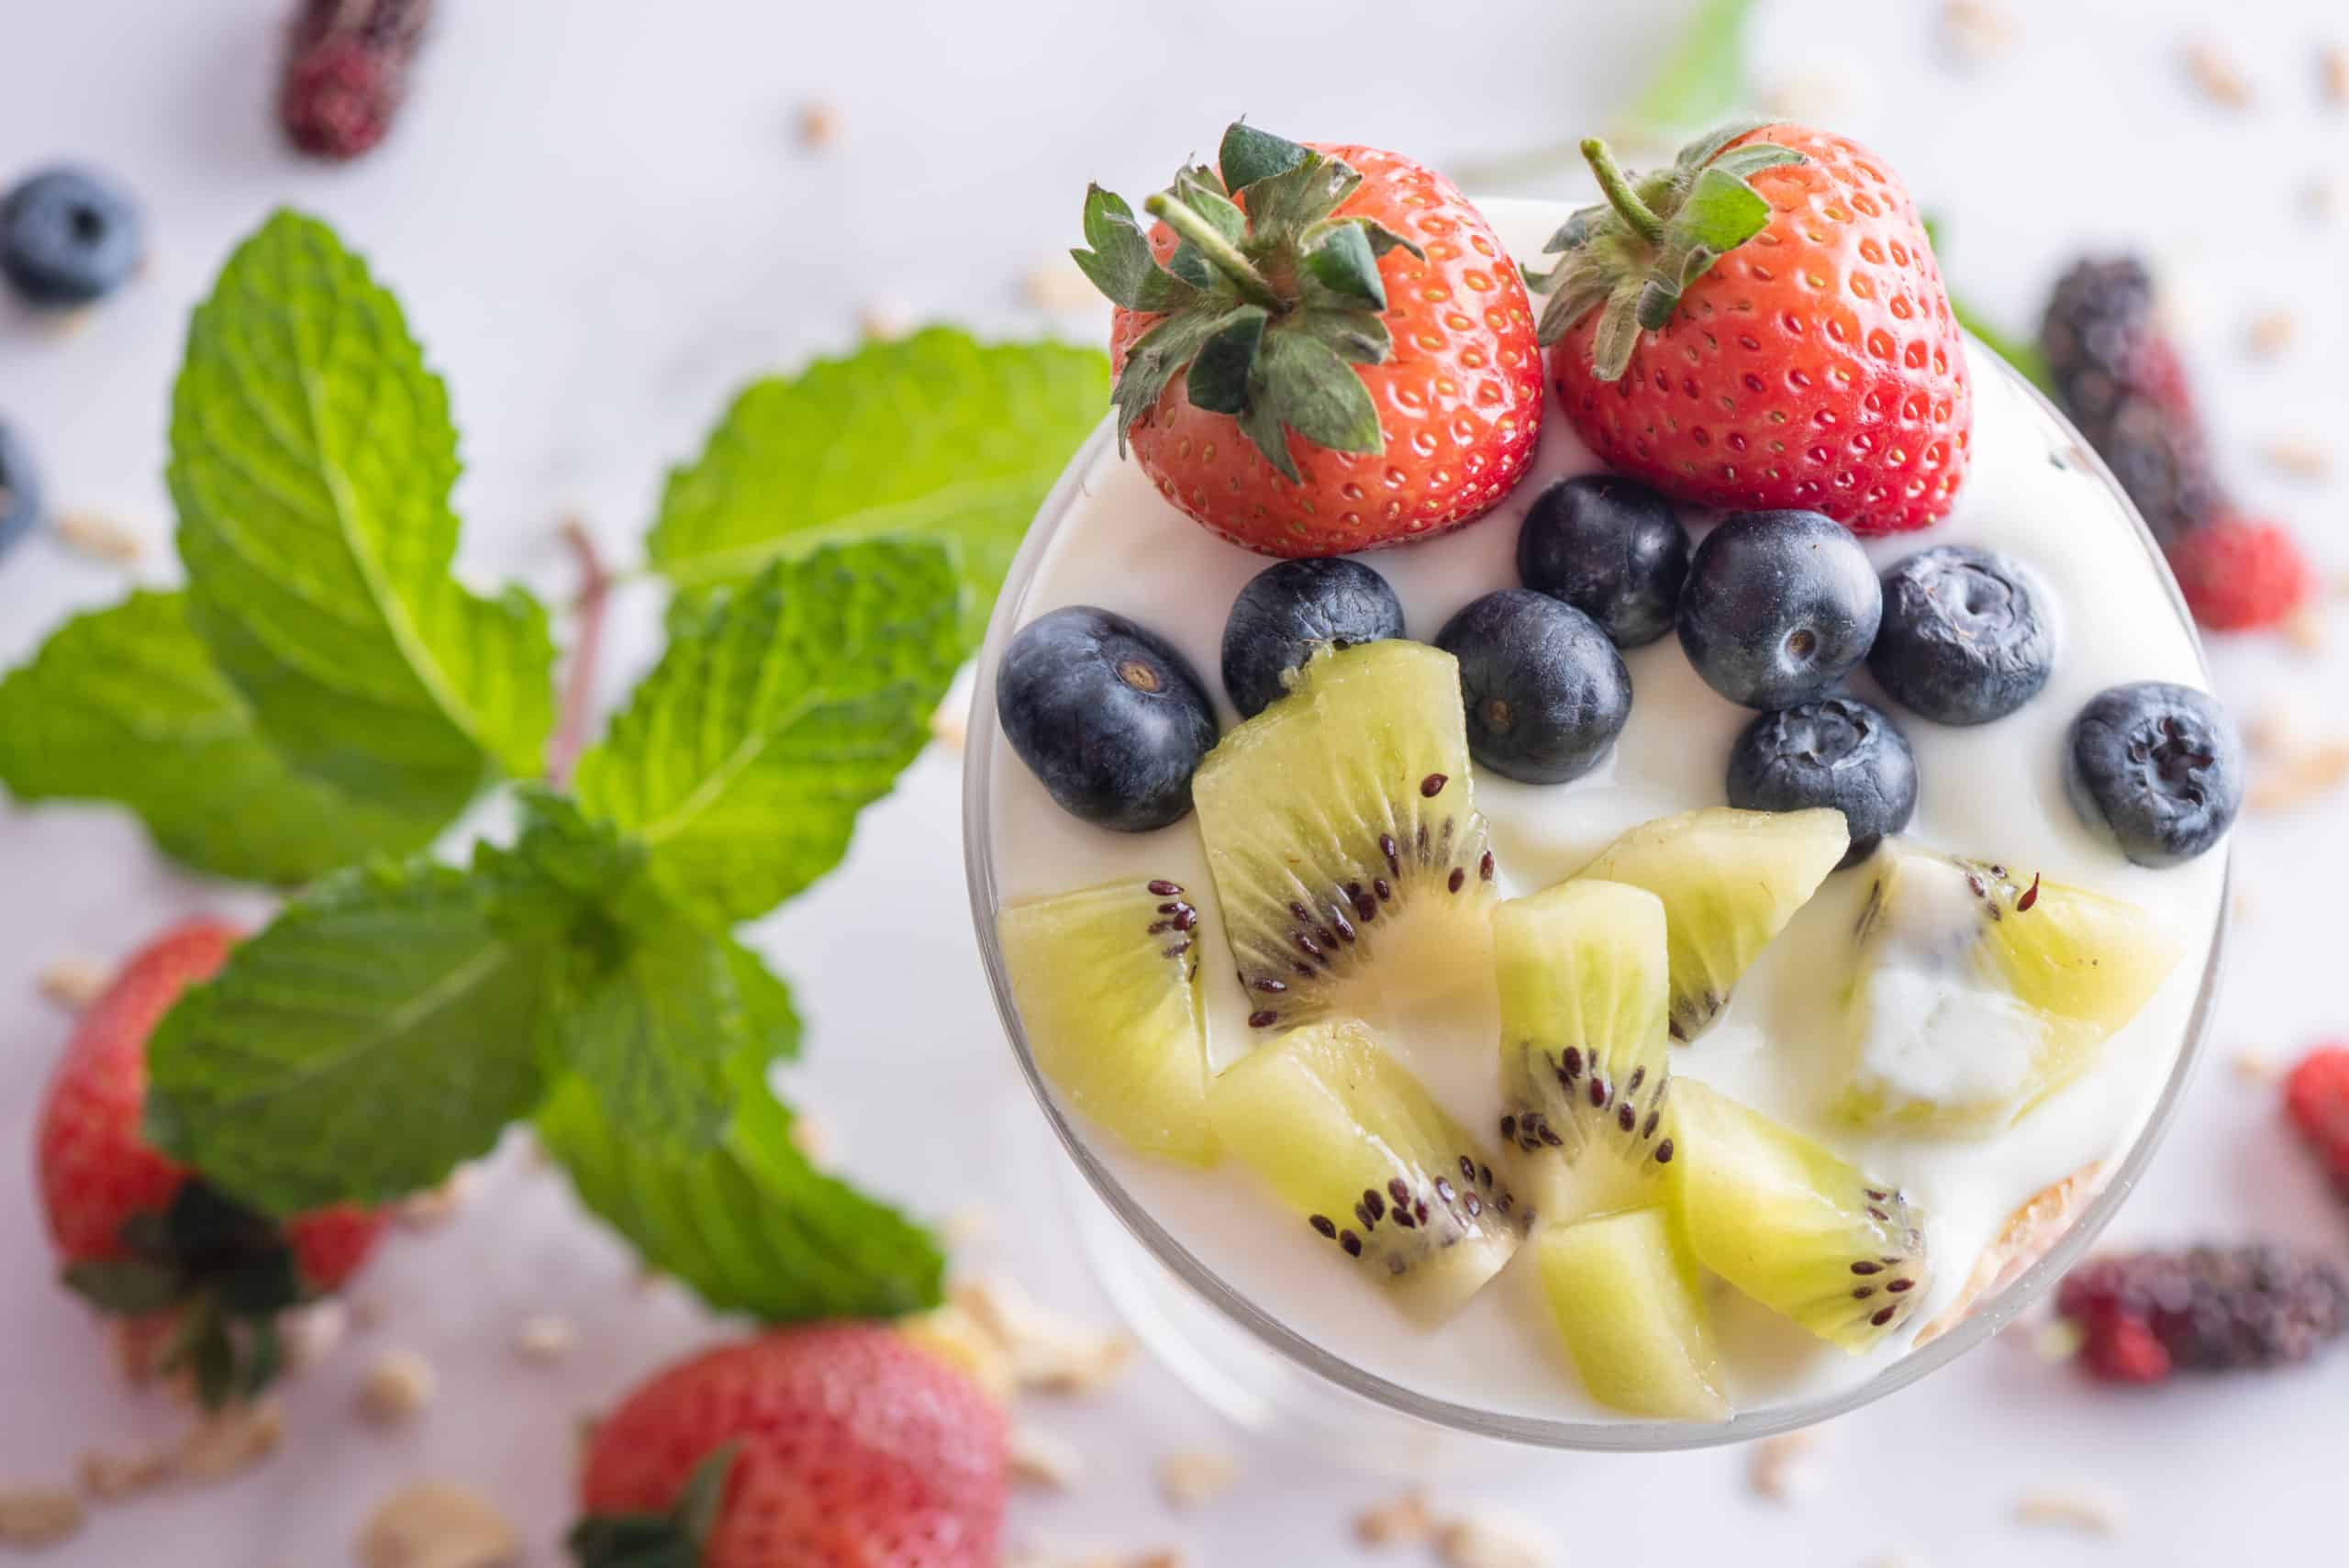 homemade-muesli-bowl-oat-granola-with-yogurt-fresh-blueberries-mulberry-strawberries-kiwi-mint-nuts-board-healthy-breakfast-copy-space-healthy-breakfast-concept-clean-eating-scaled